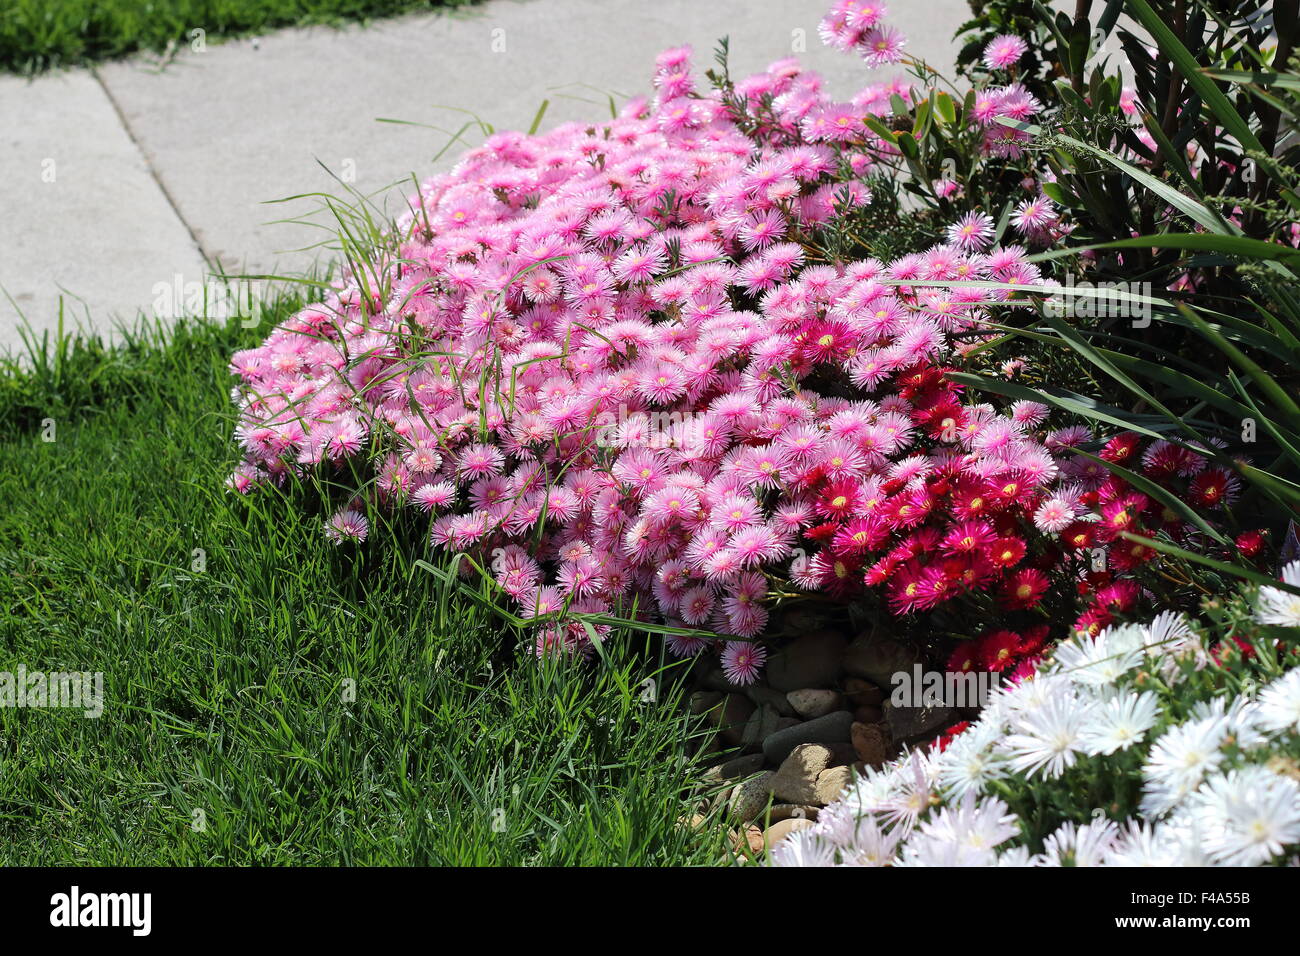 Rot und rosa Pigface oder Livingstone Gänseblümchen in voller Blüte Stockfoto